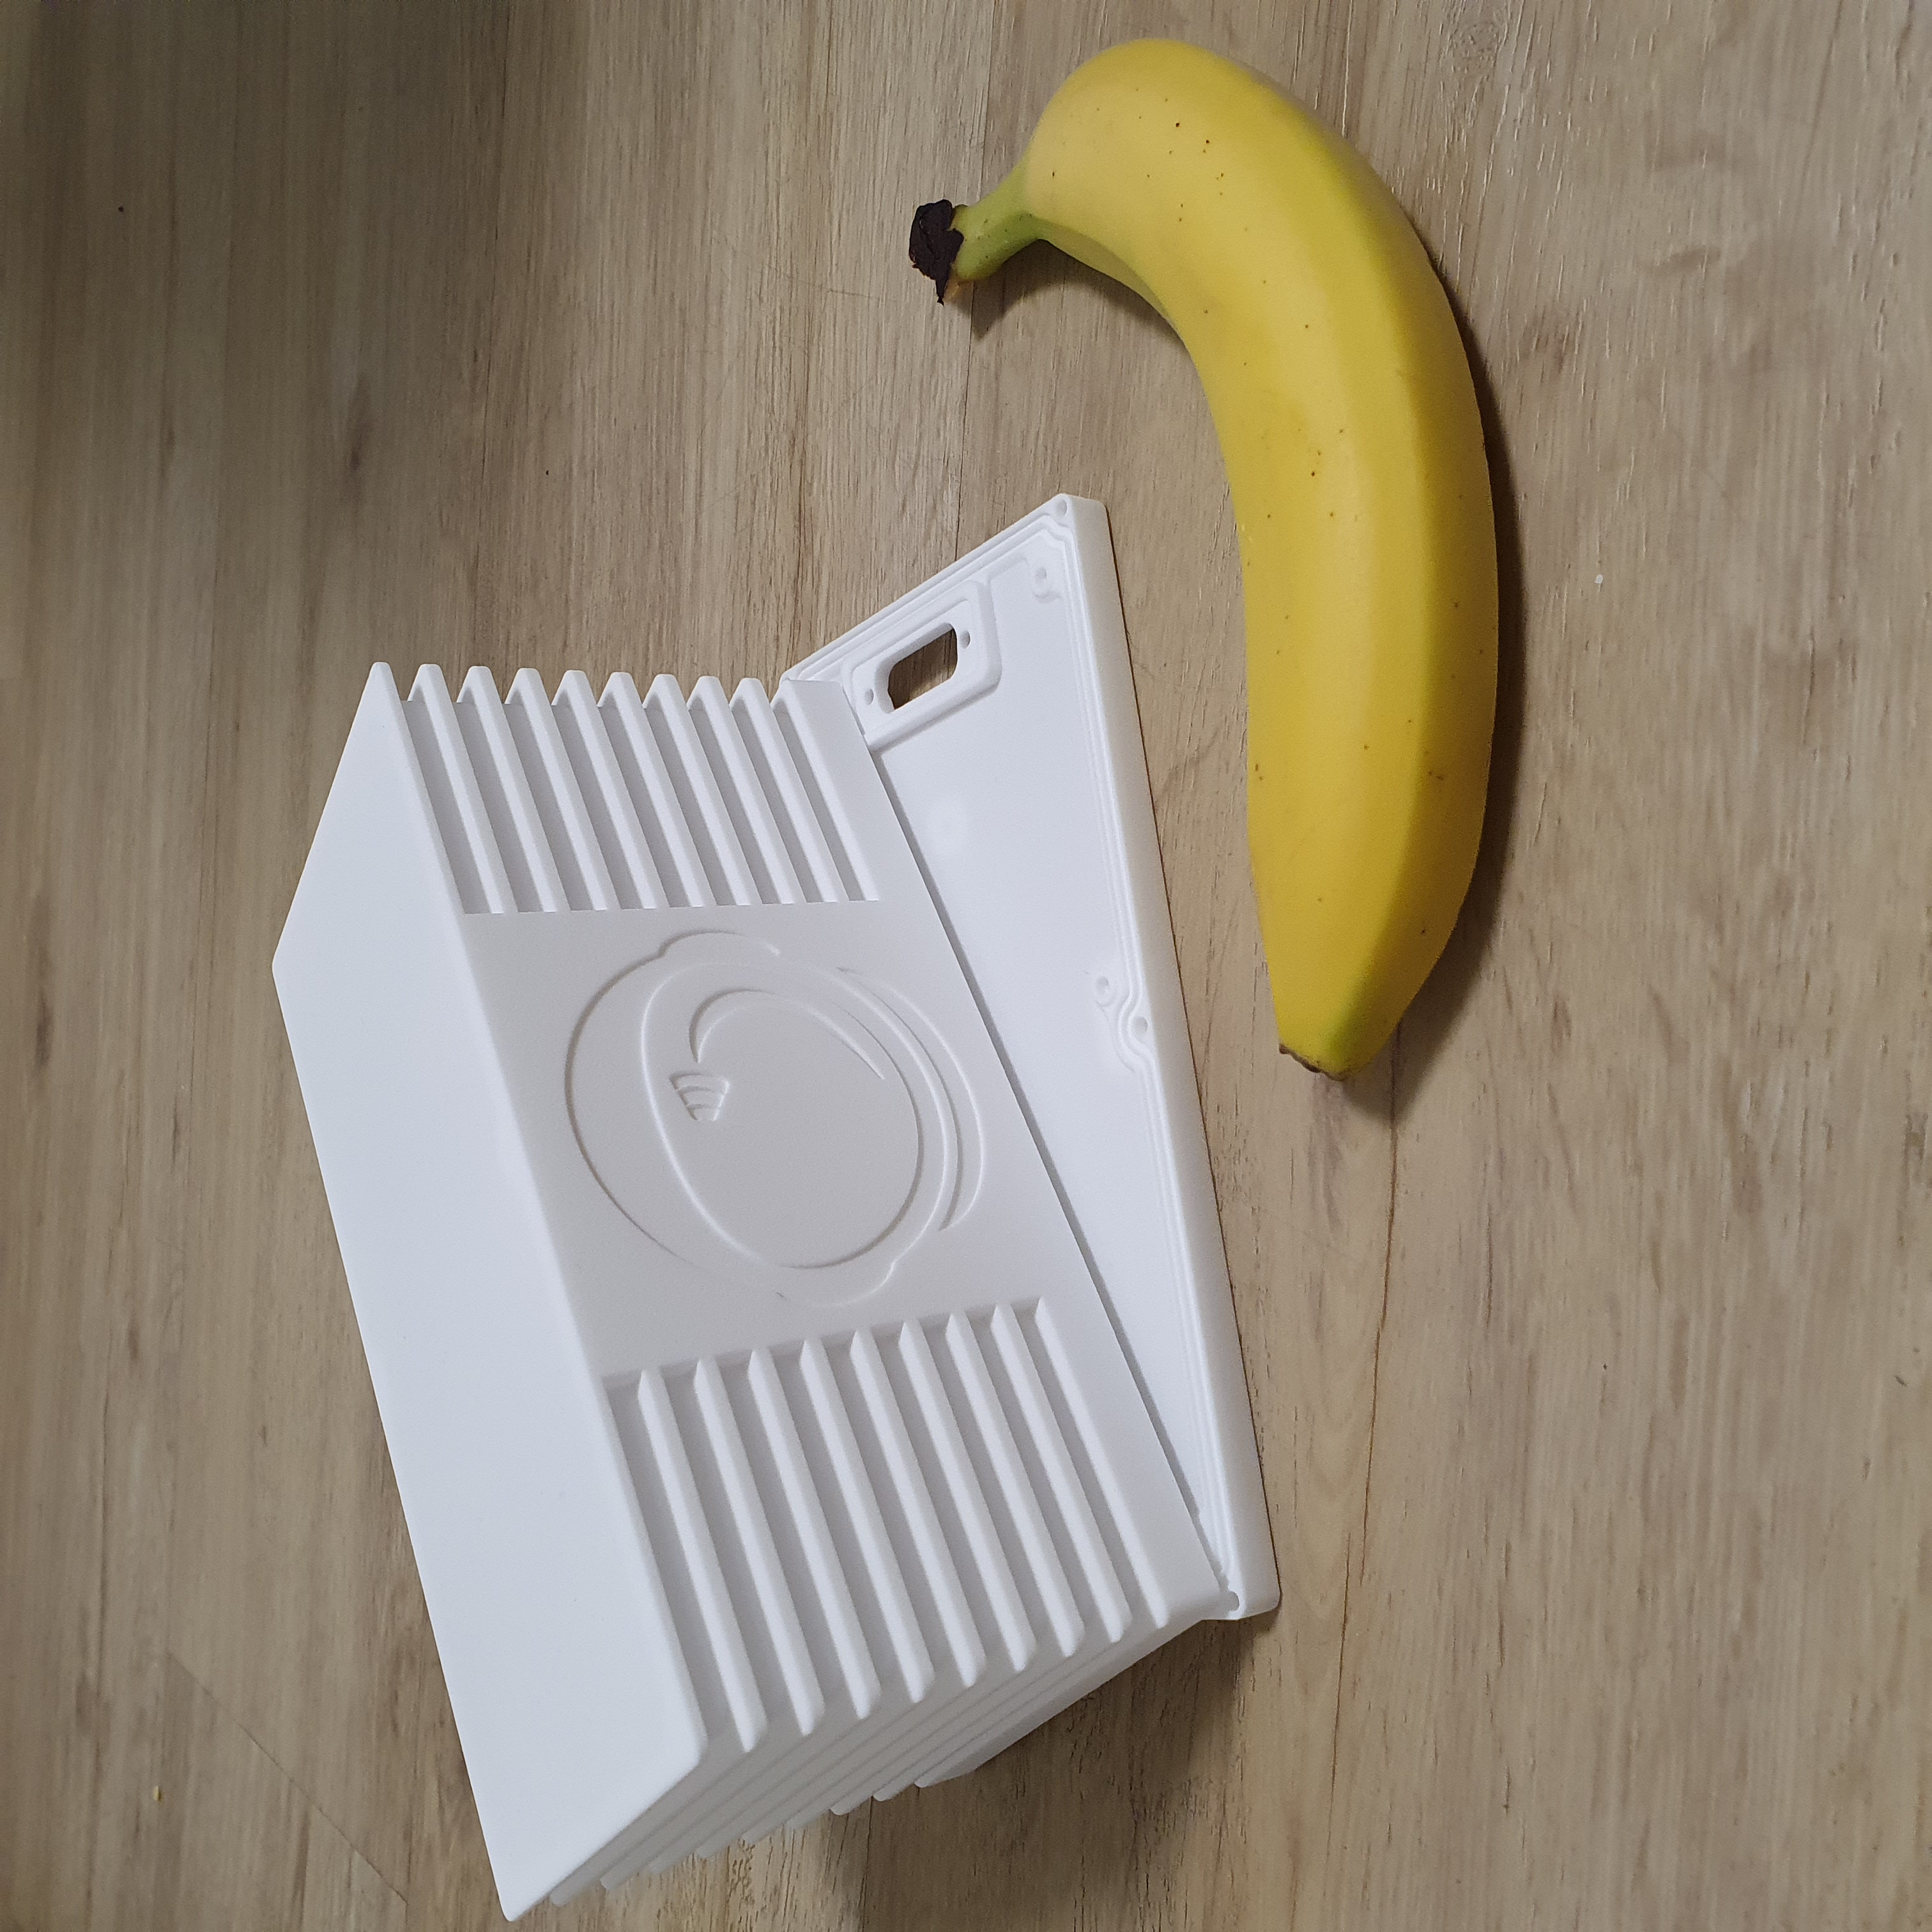 CubeLab Mockup (Banana for scale)